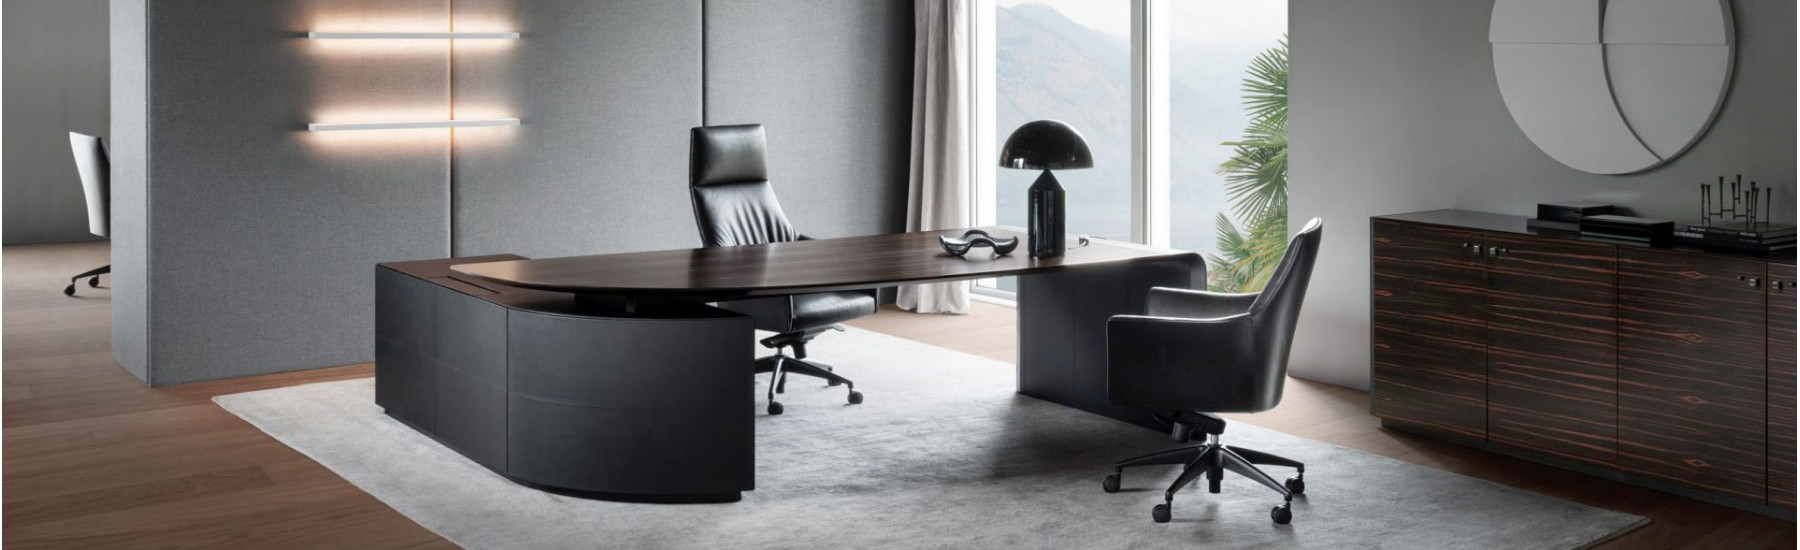 Luxury Siena Executive Desk